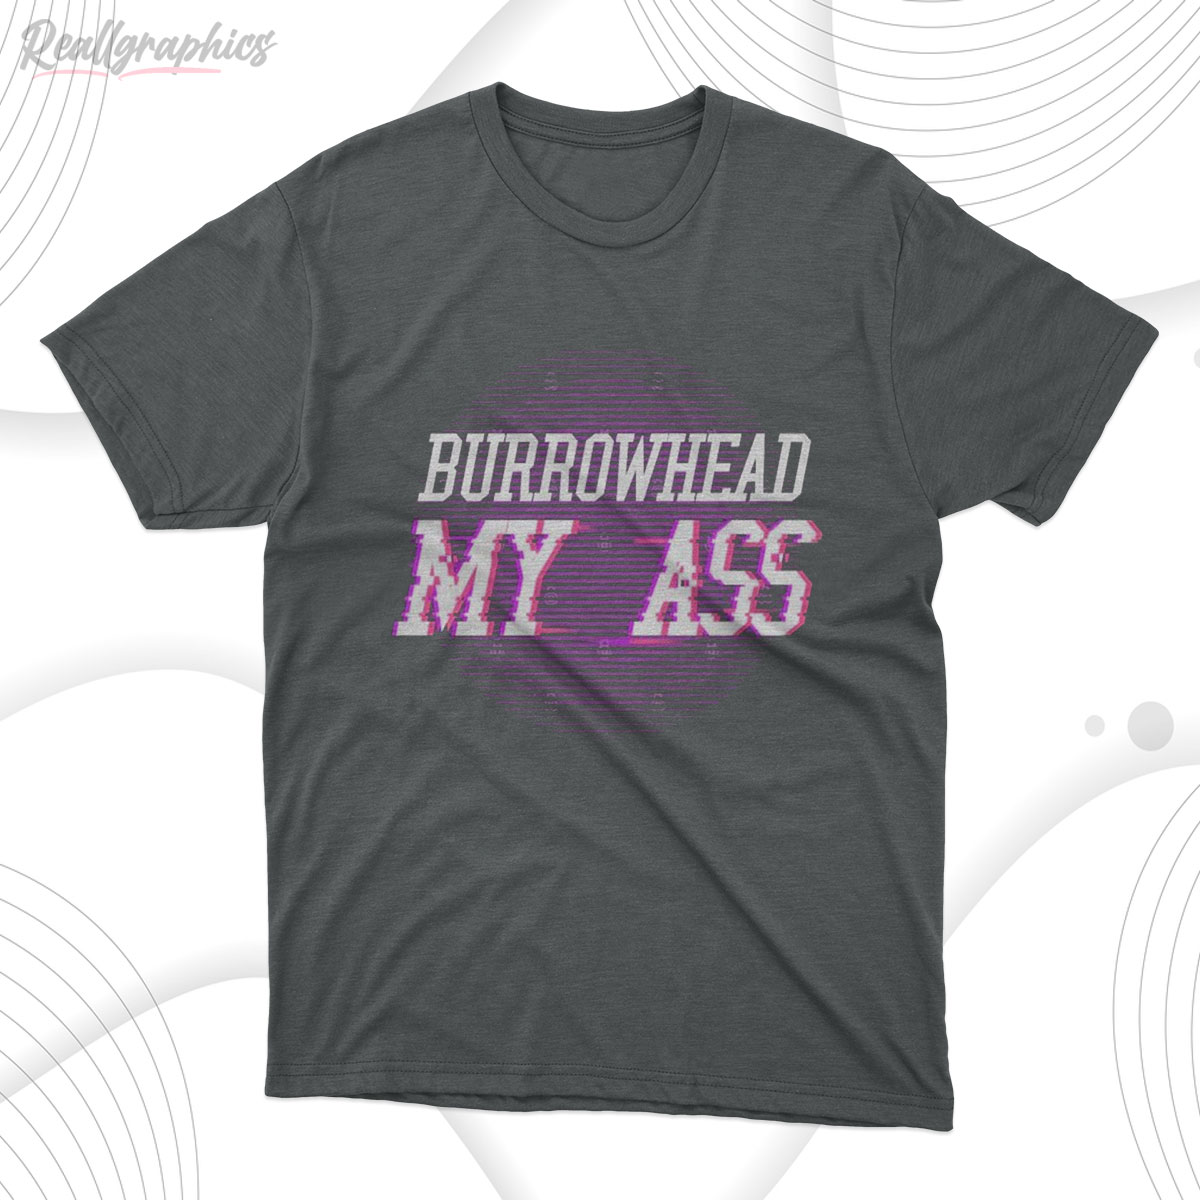 Vintage Burrowhead My Ass Shirt